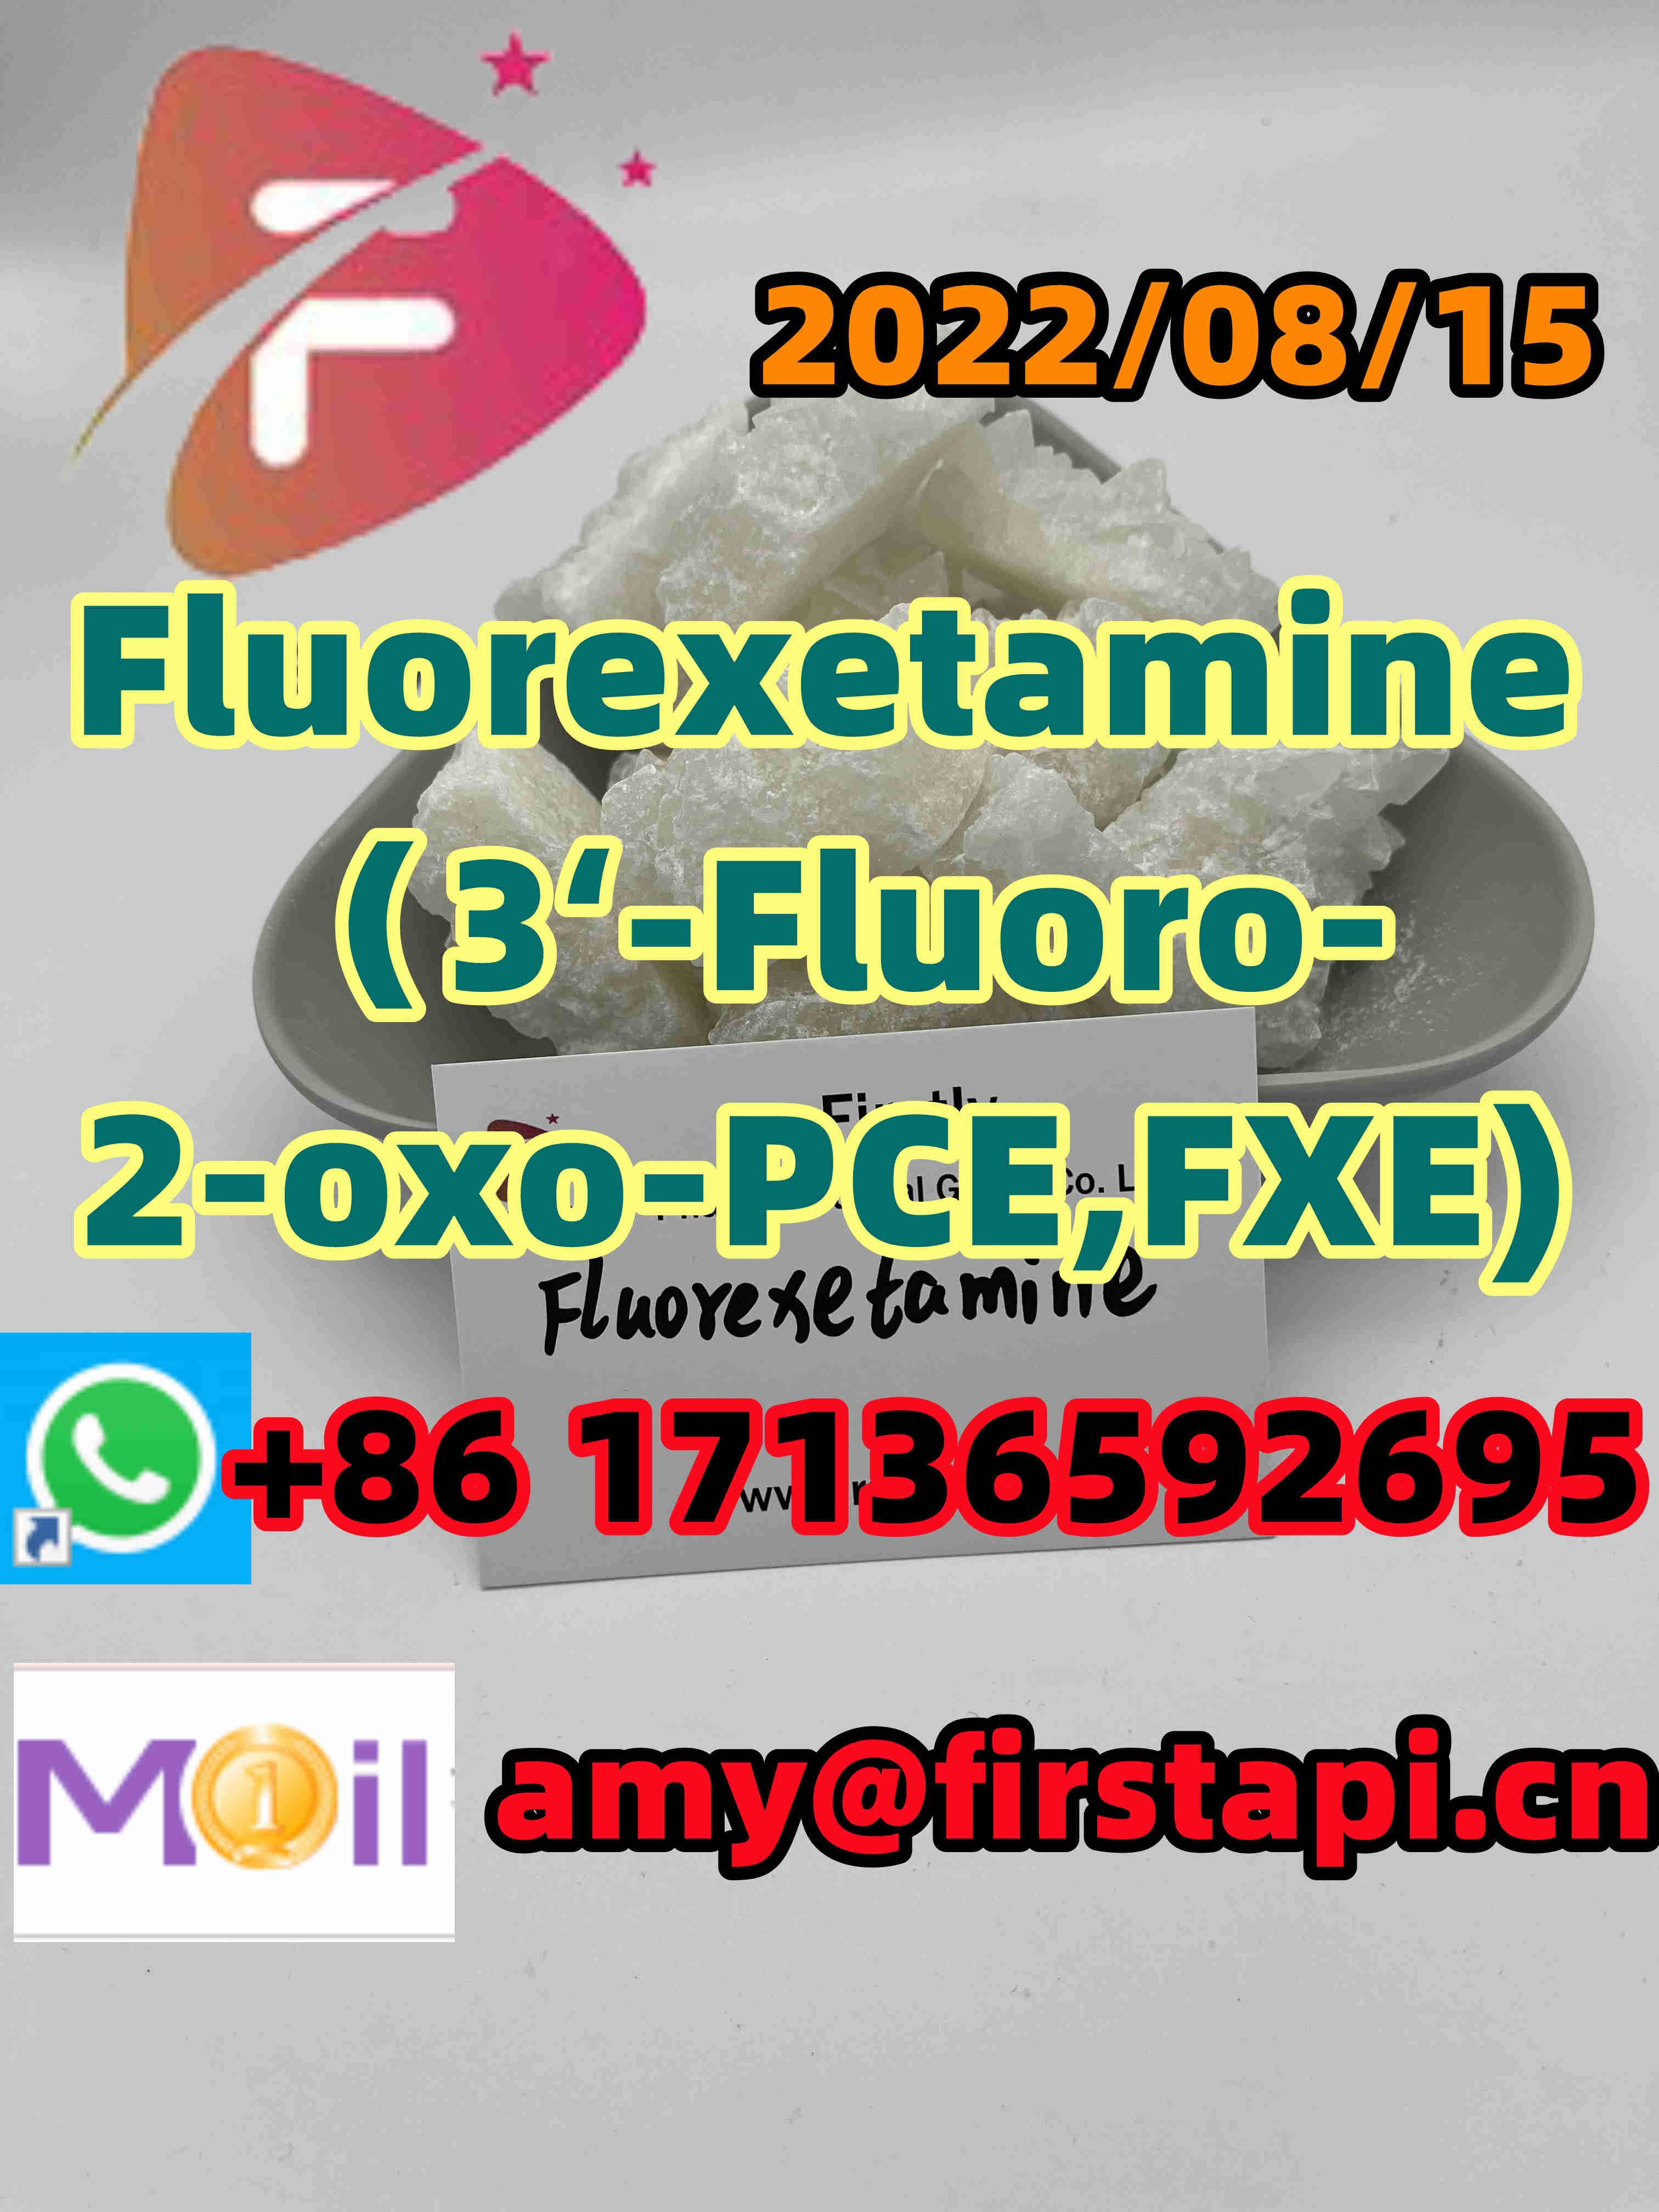 High quality,low price,（3‘-Fluoro-2-oxo-PCE,FXE),Fluorexetamine - photo